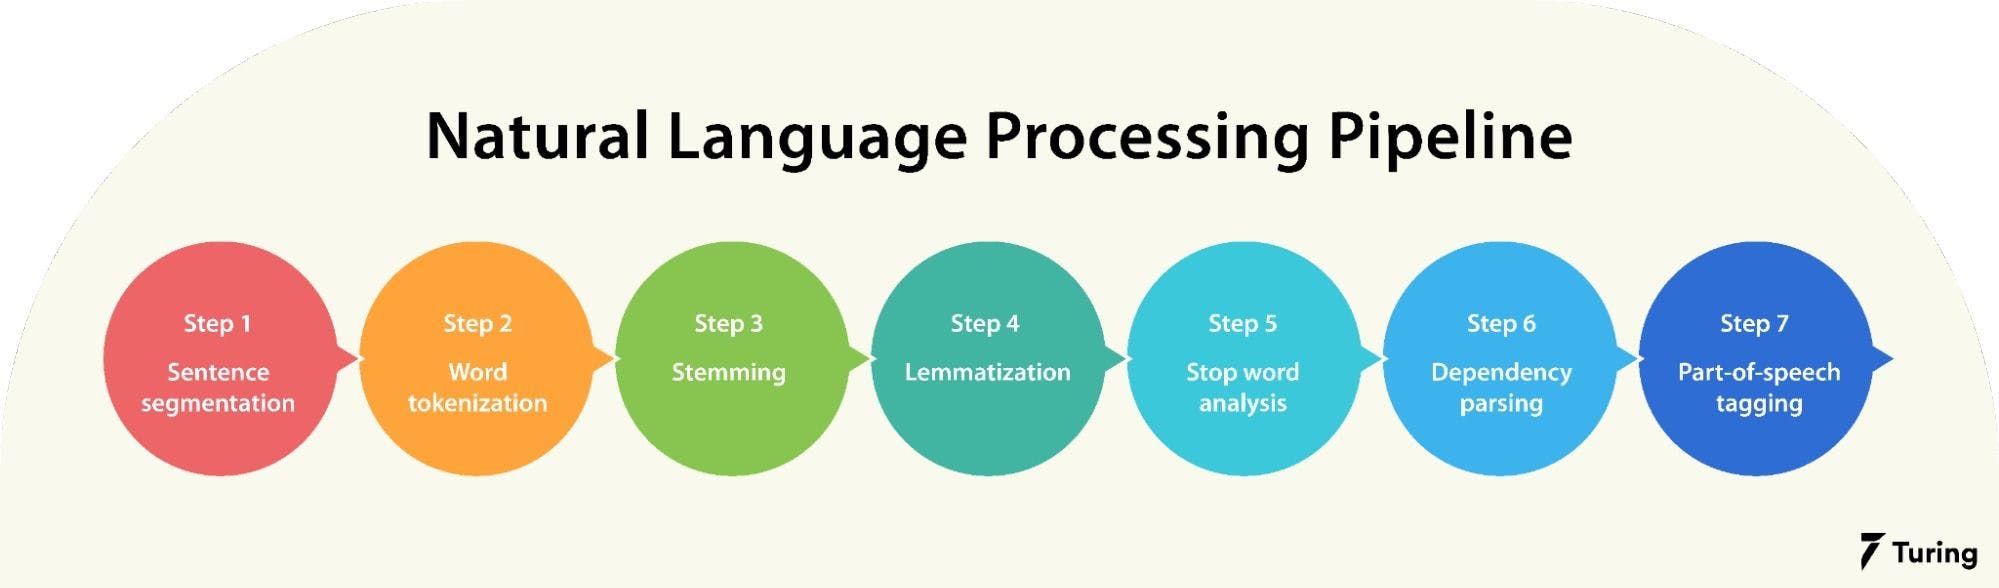 Natural language processing pipeline.webp